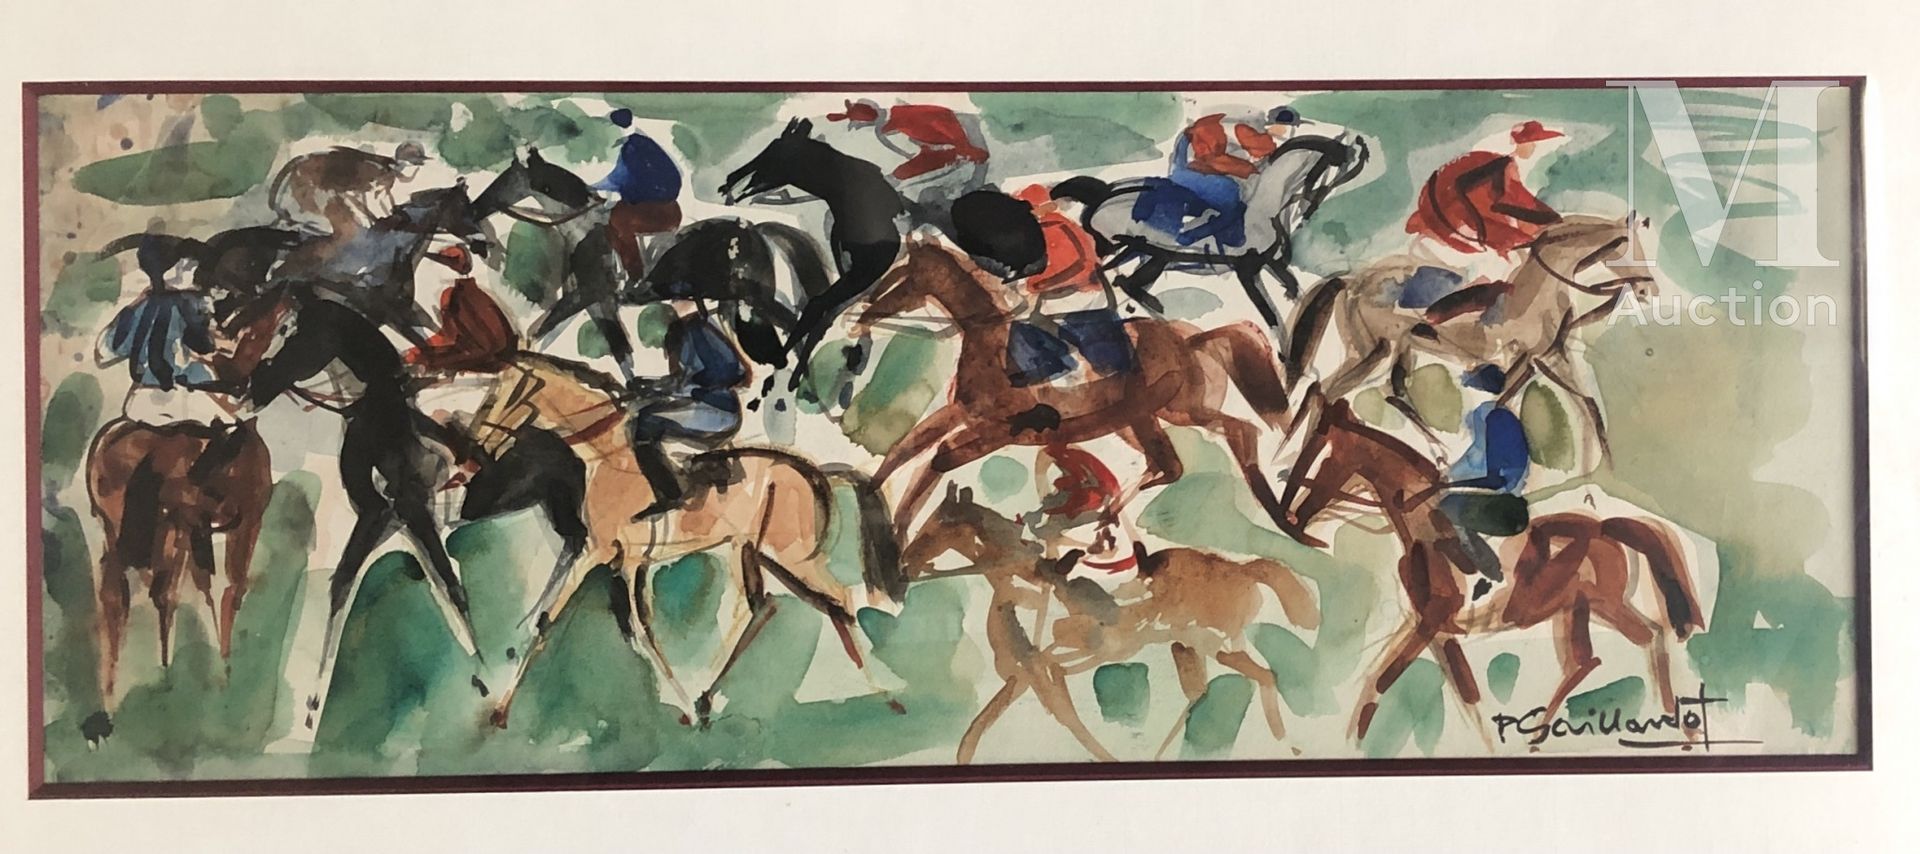 Pierre GAILLARDOT (1910-2002) 马球比赛

纸上水彩画

右下方有签名

24 x 66 cm